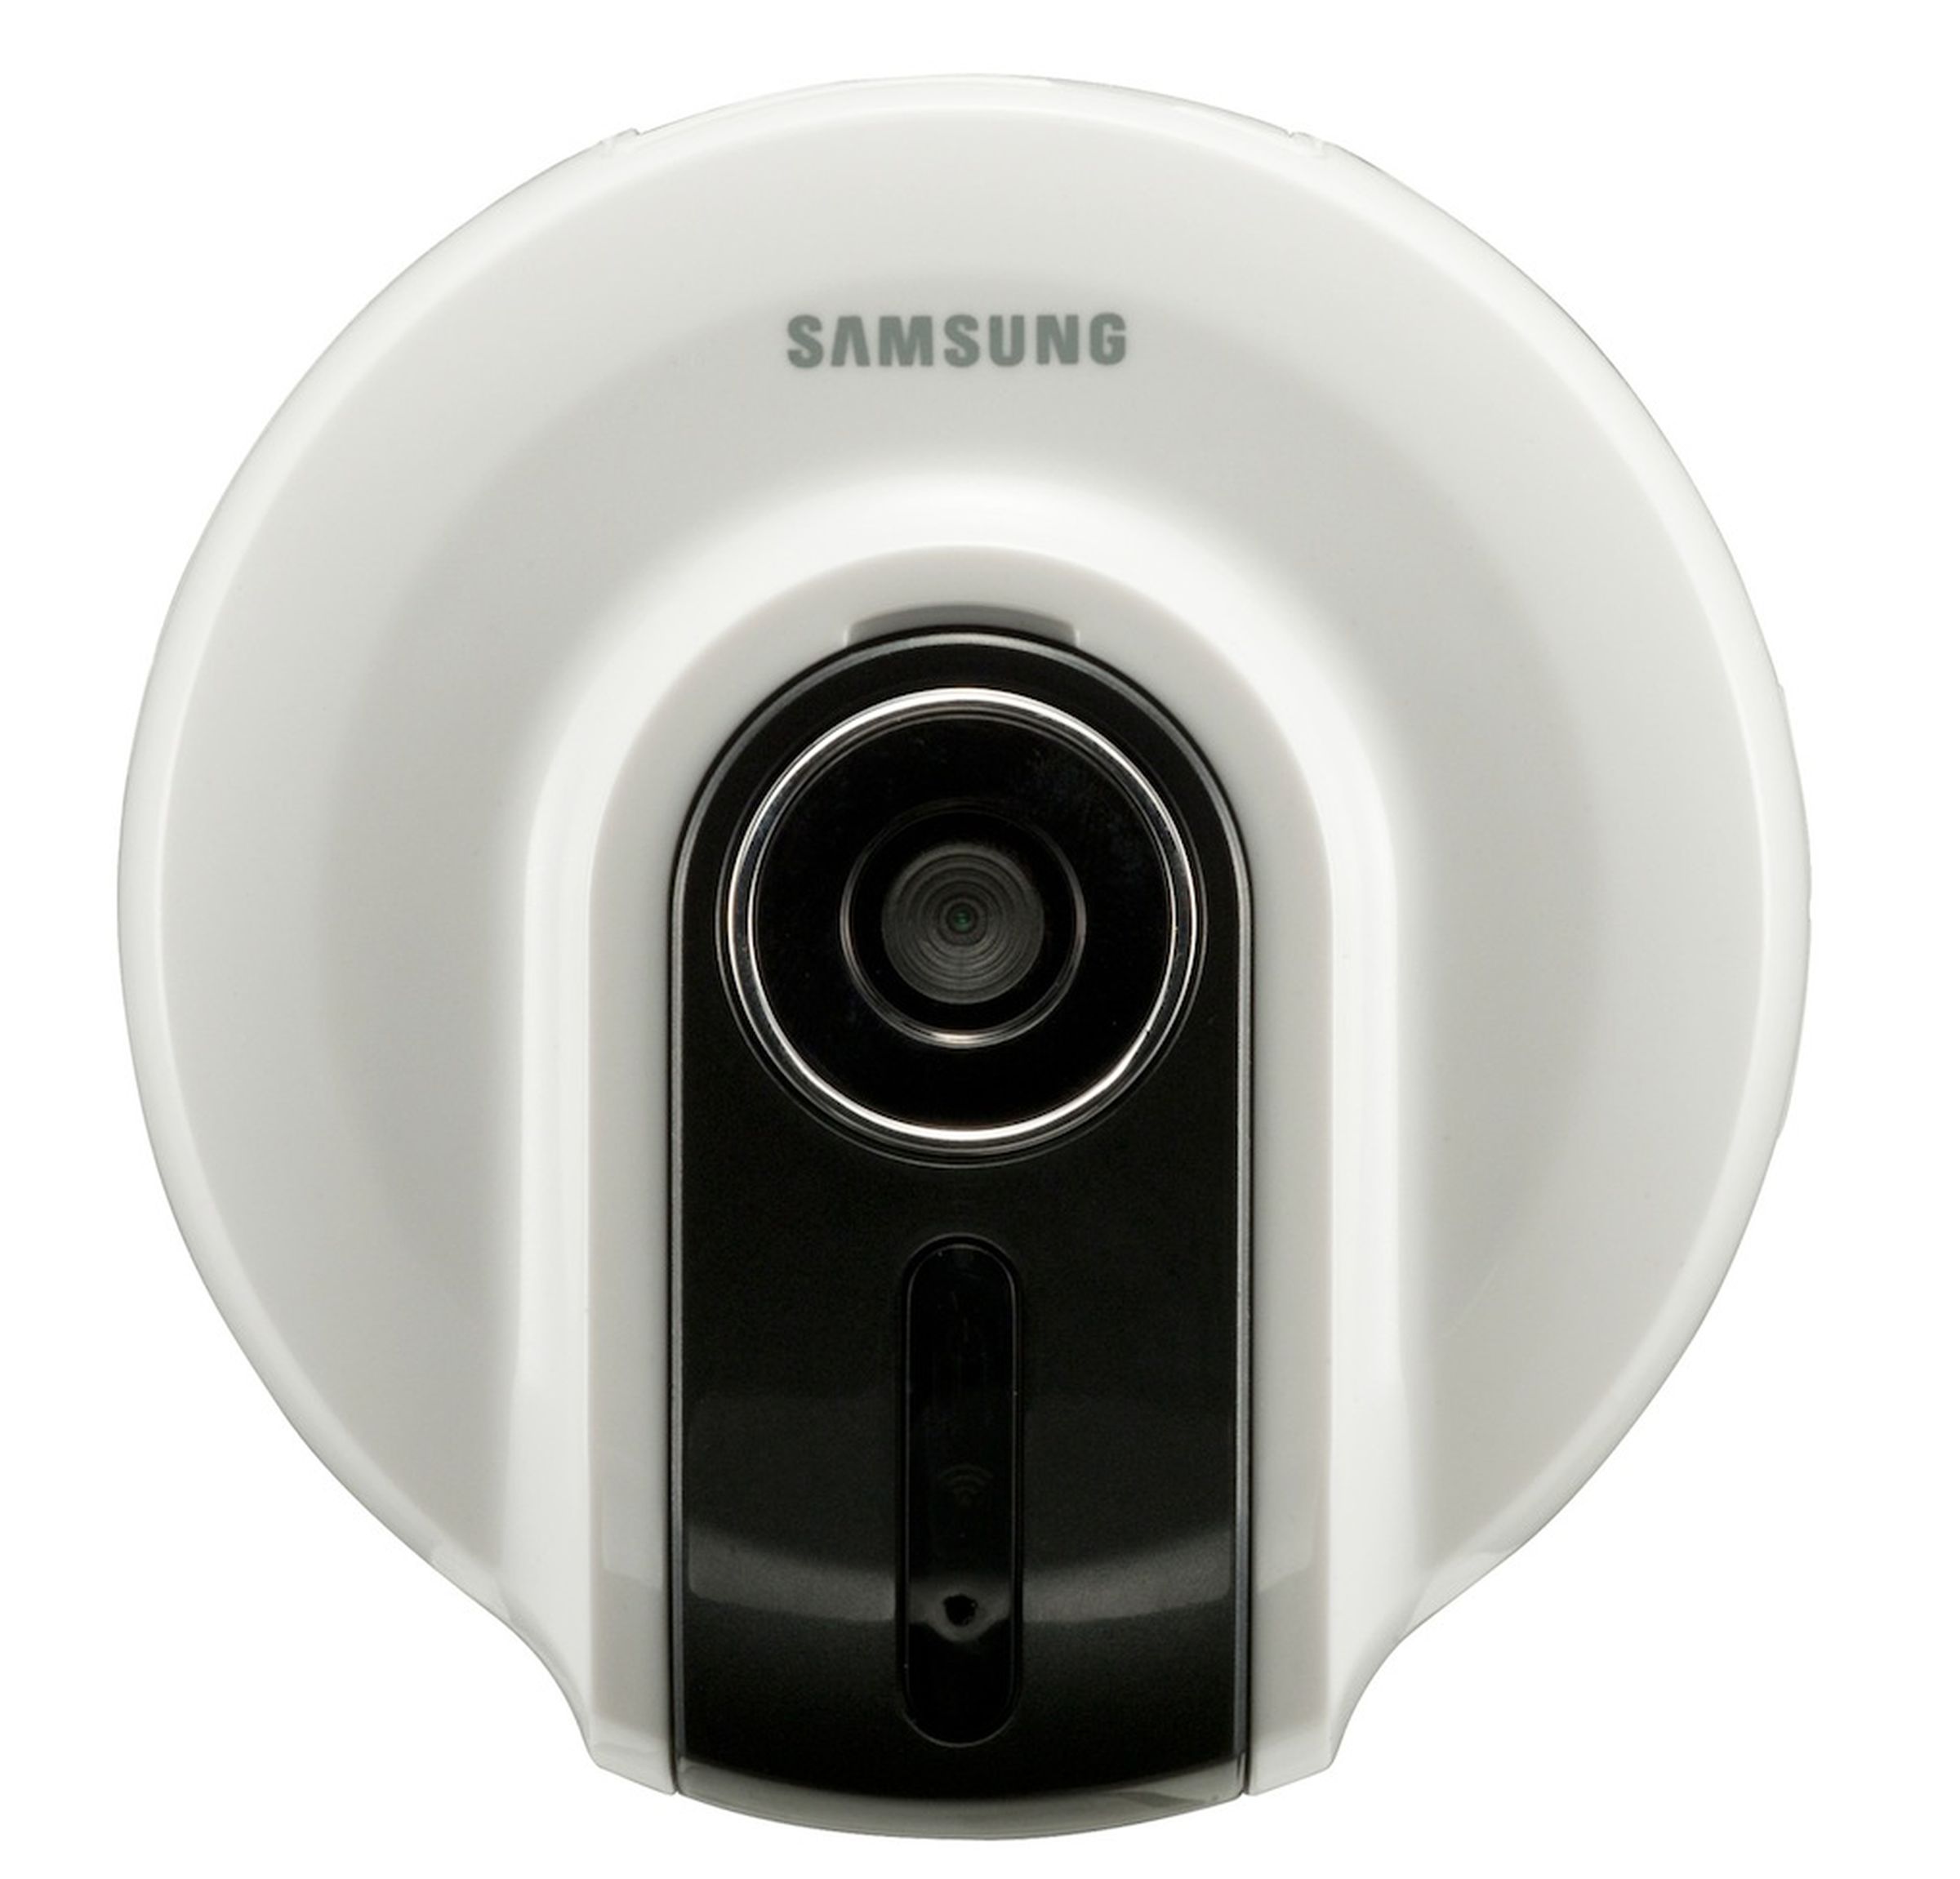 Samsung Wi-Fi video baby monitor